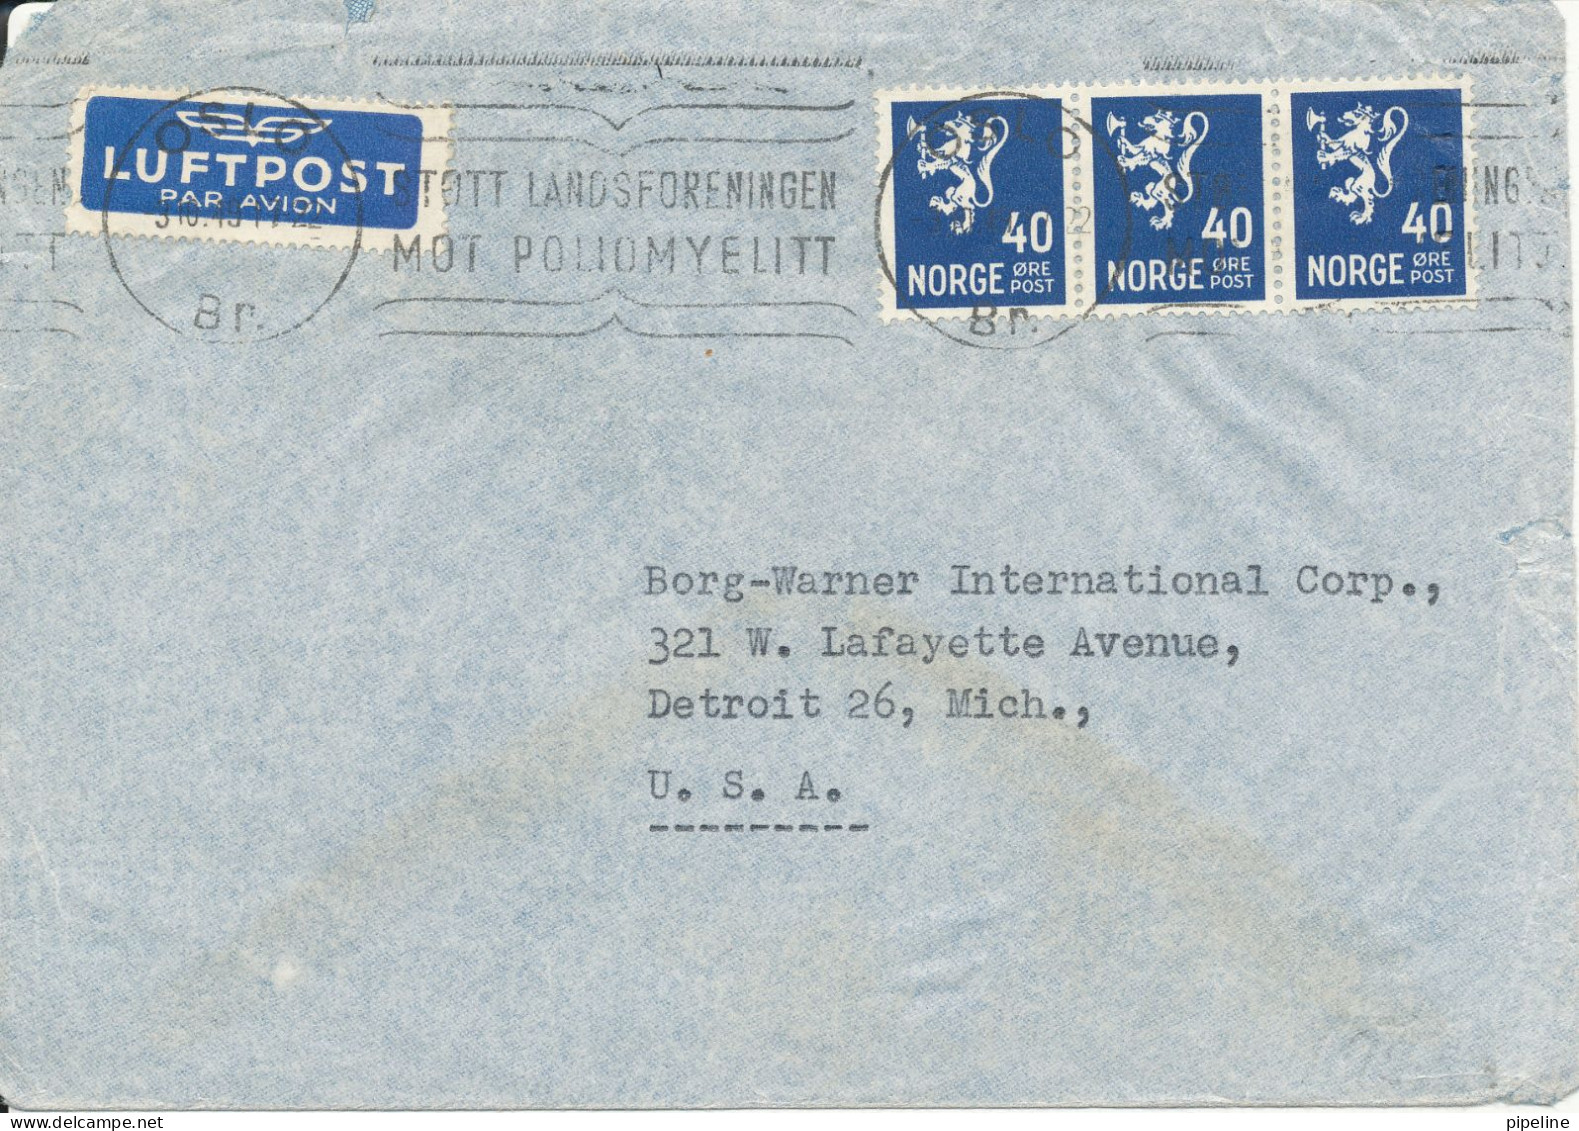 Norway Air Mail Cover Sent To USA 3-10-1949 (Stött Landsforeningen Mot Poliomyelitt) (A/S Norge Rollator Oslo) - Briefe U. Dokumente